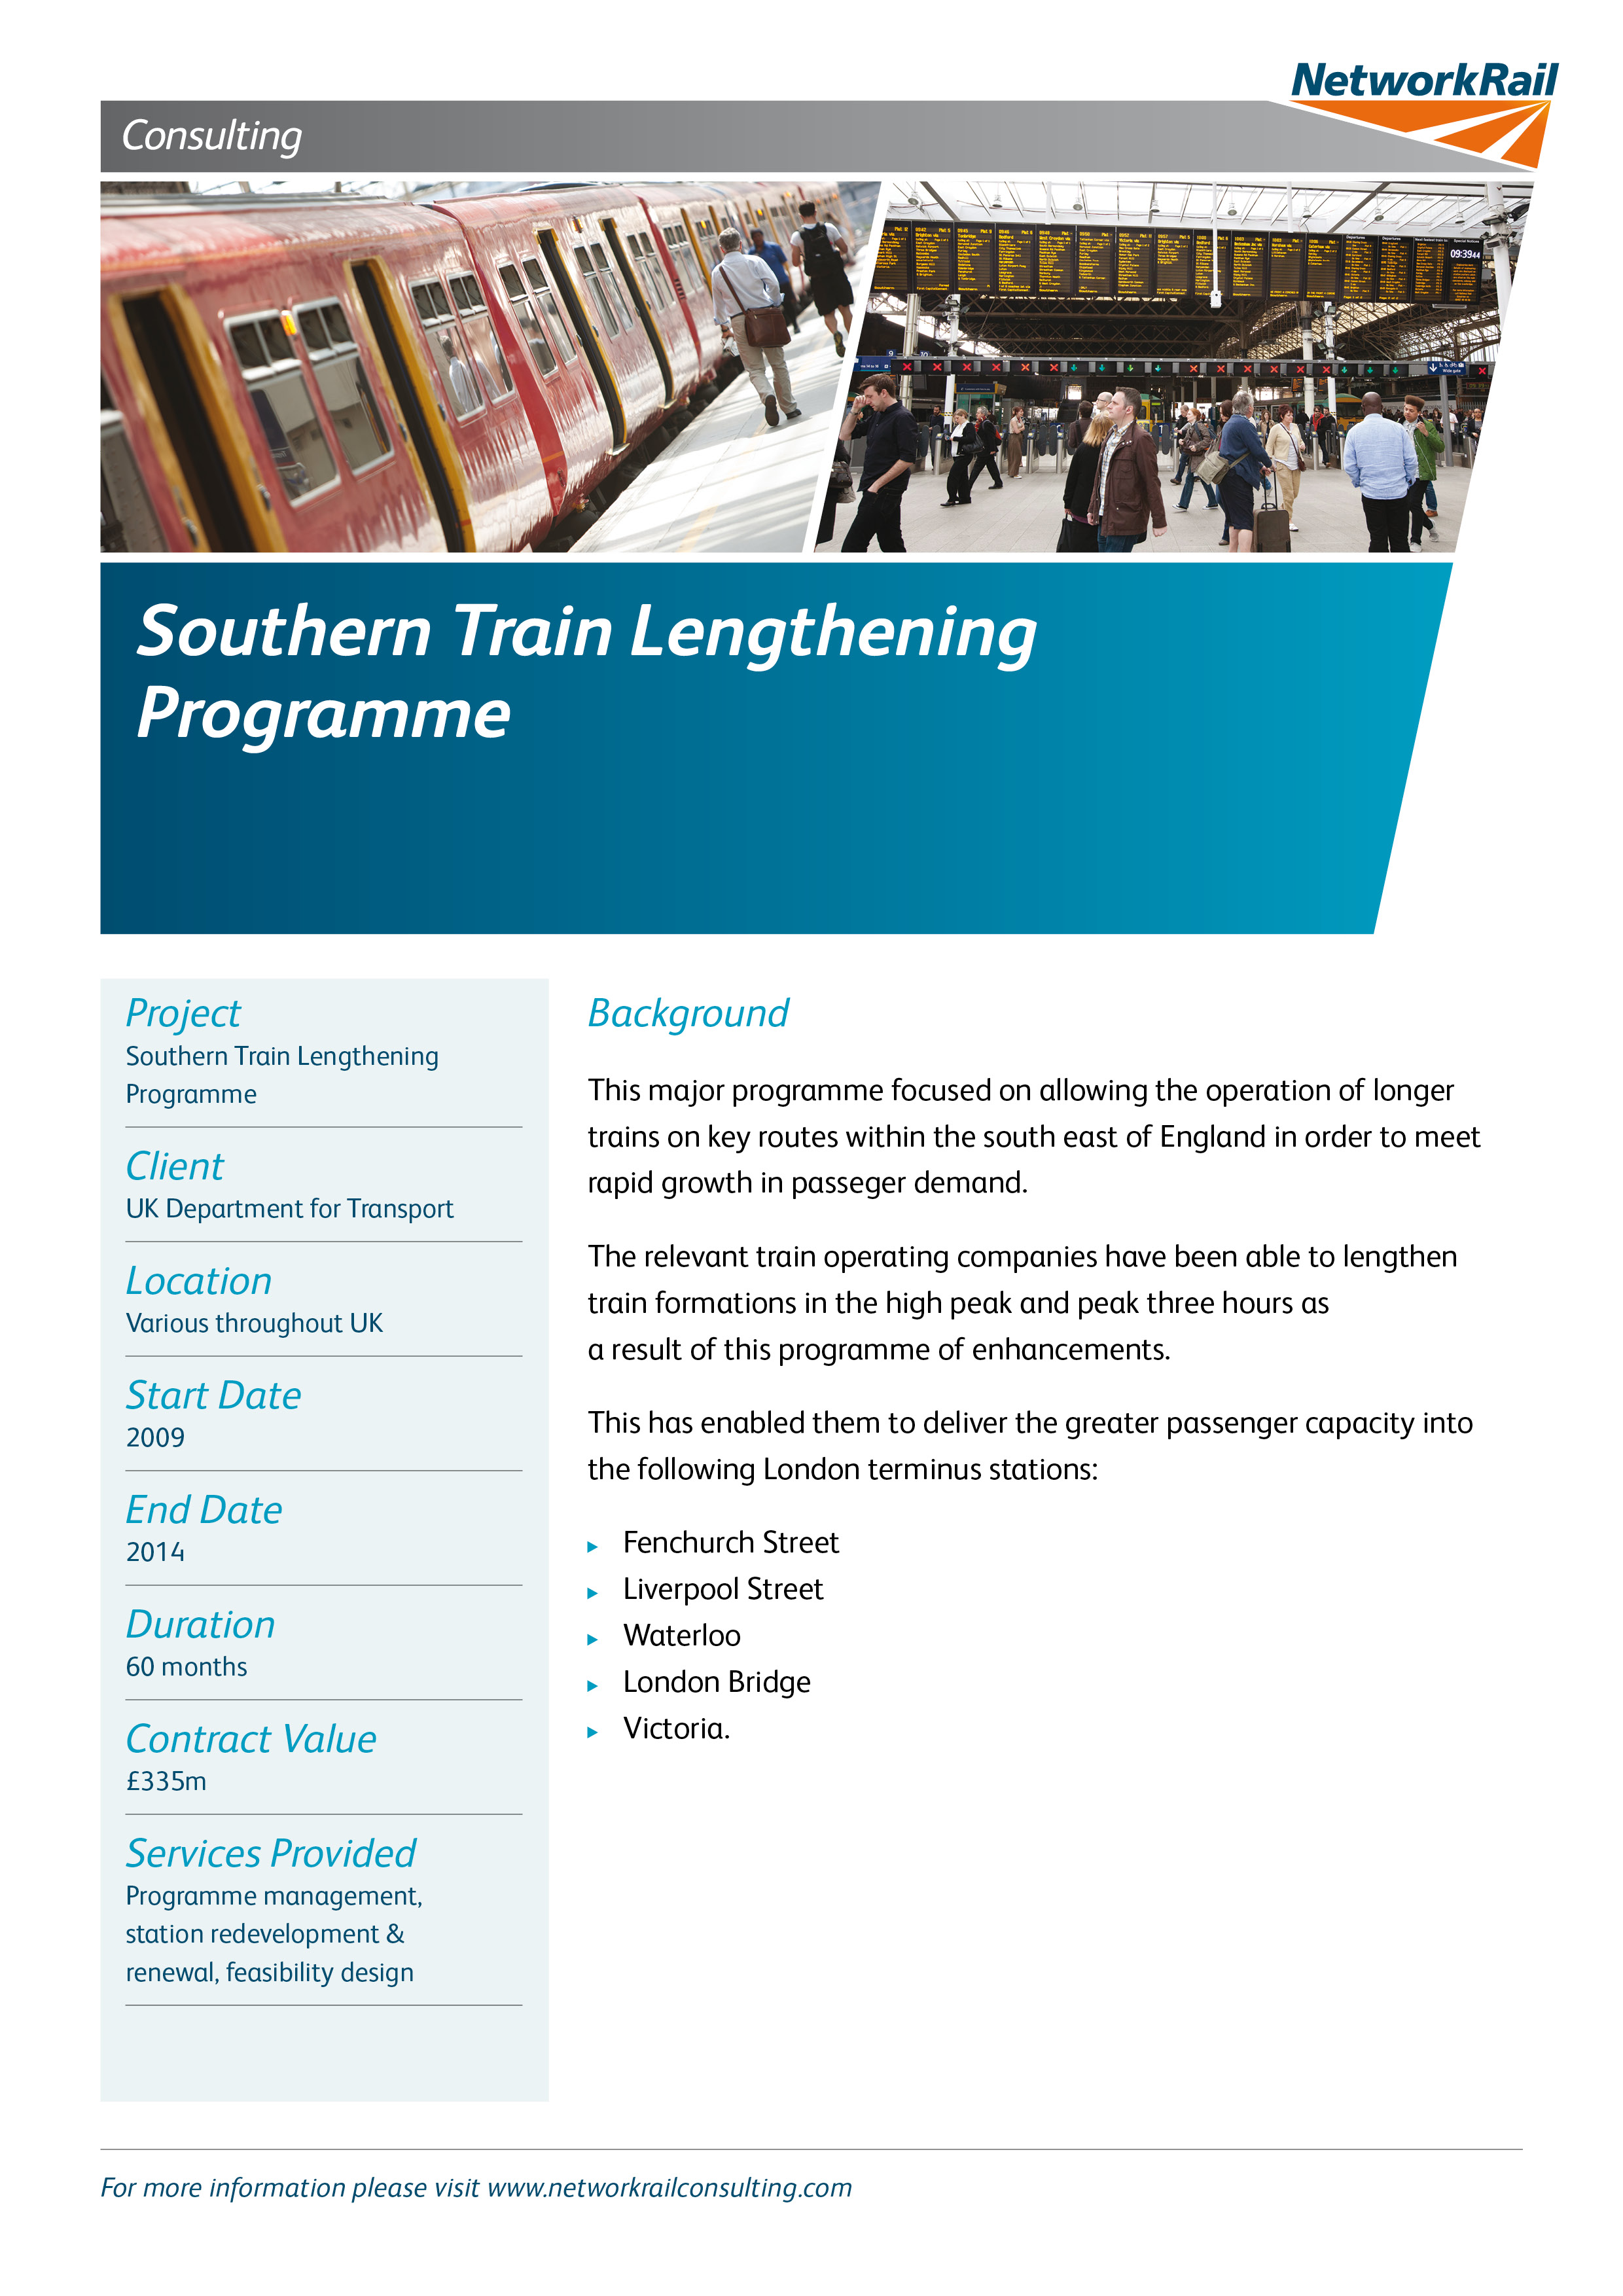 Southern Train Lengthening Programme